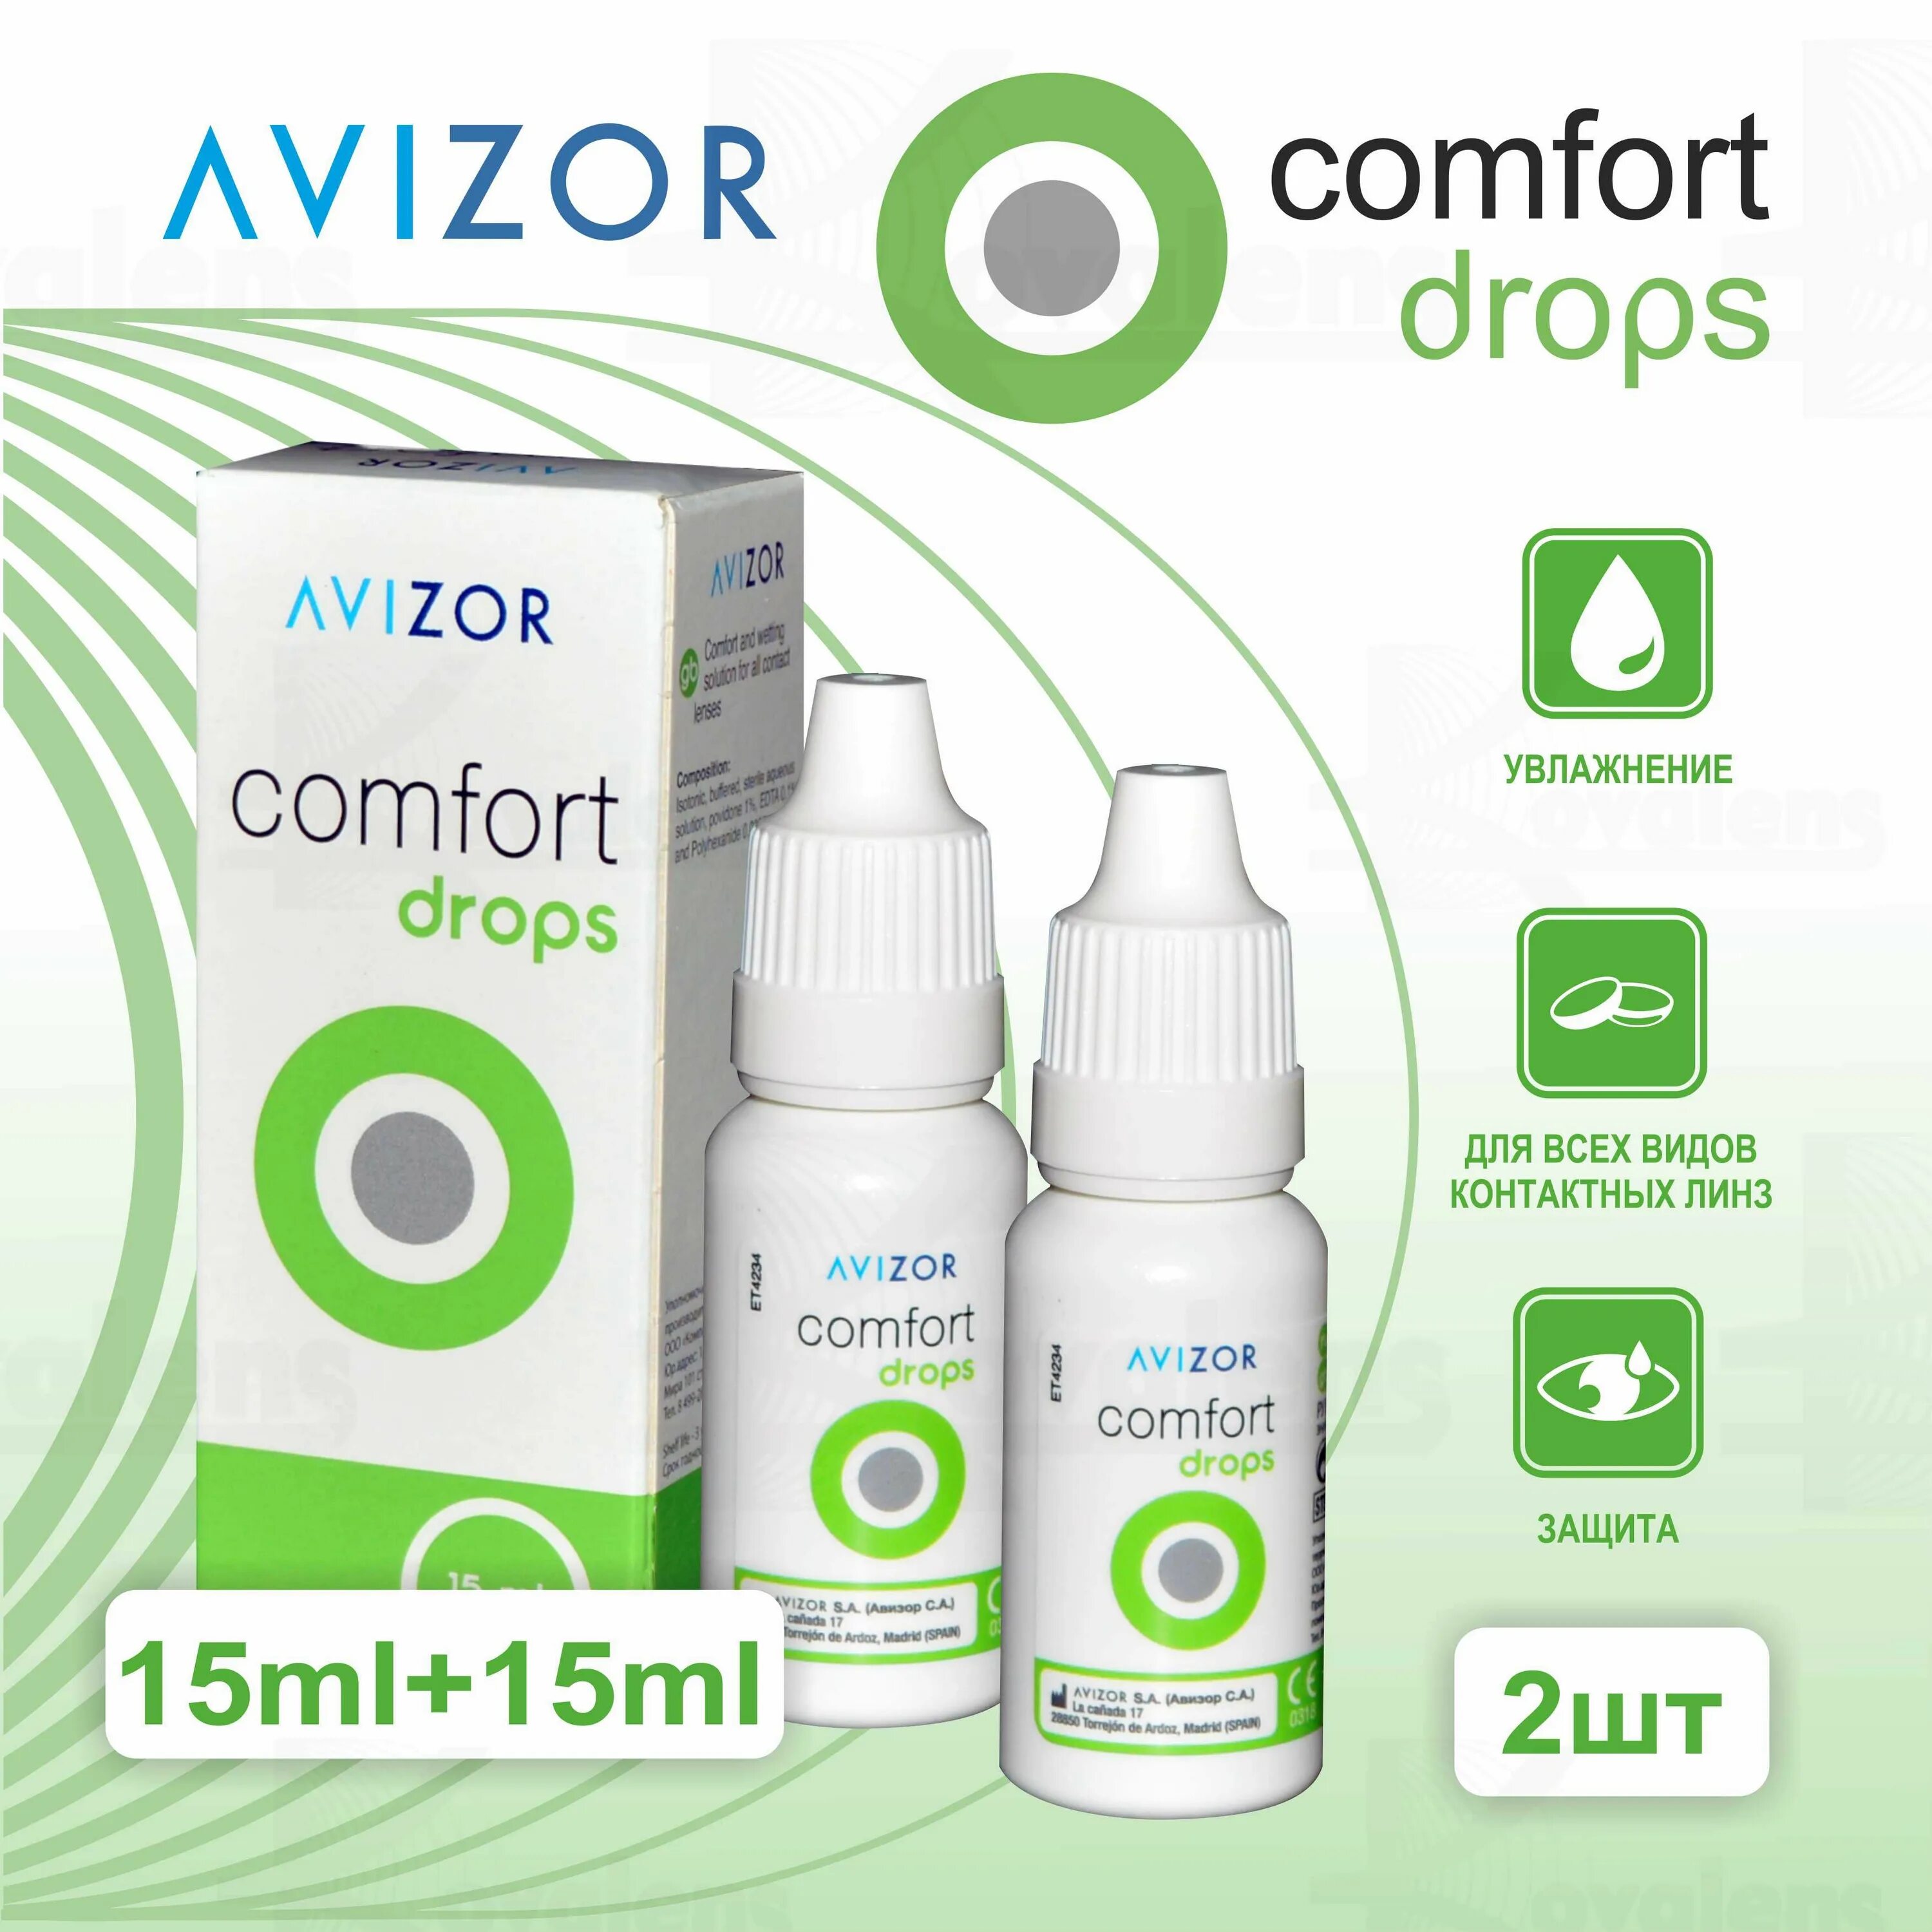 Avizor Comfort Drops. Avizor Comfort Drops 15ml. Авизор комфорт Дропс капли глазные, 15 мл Авизор. Avizor Comfort Drops капли для линз.